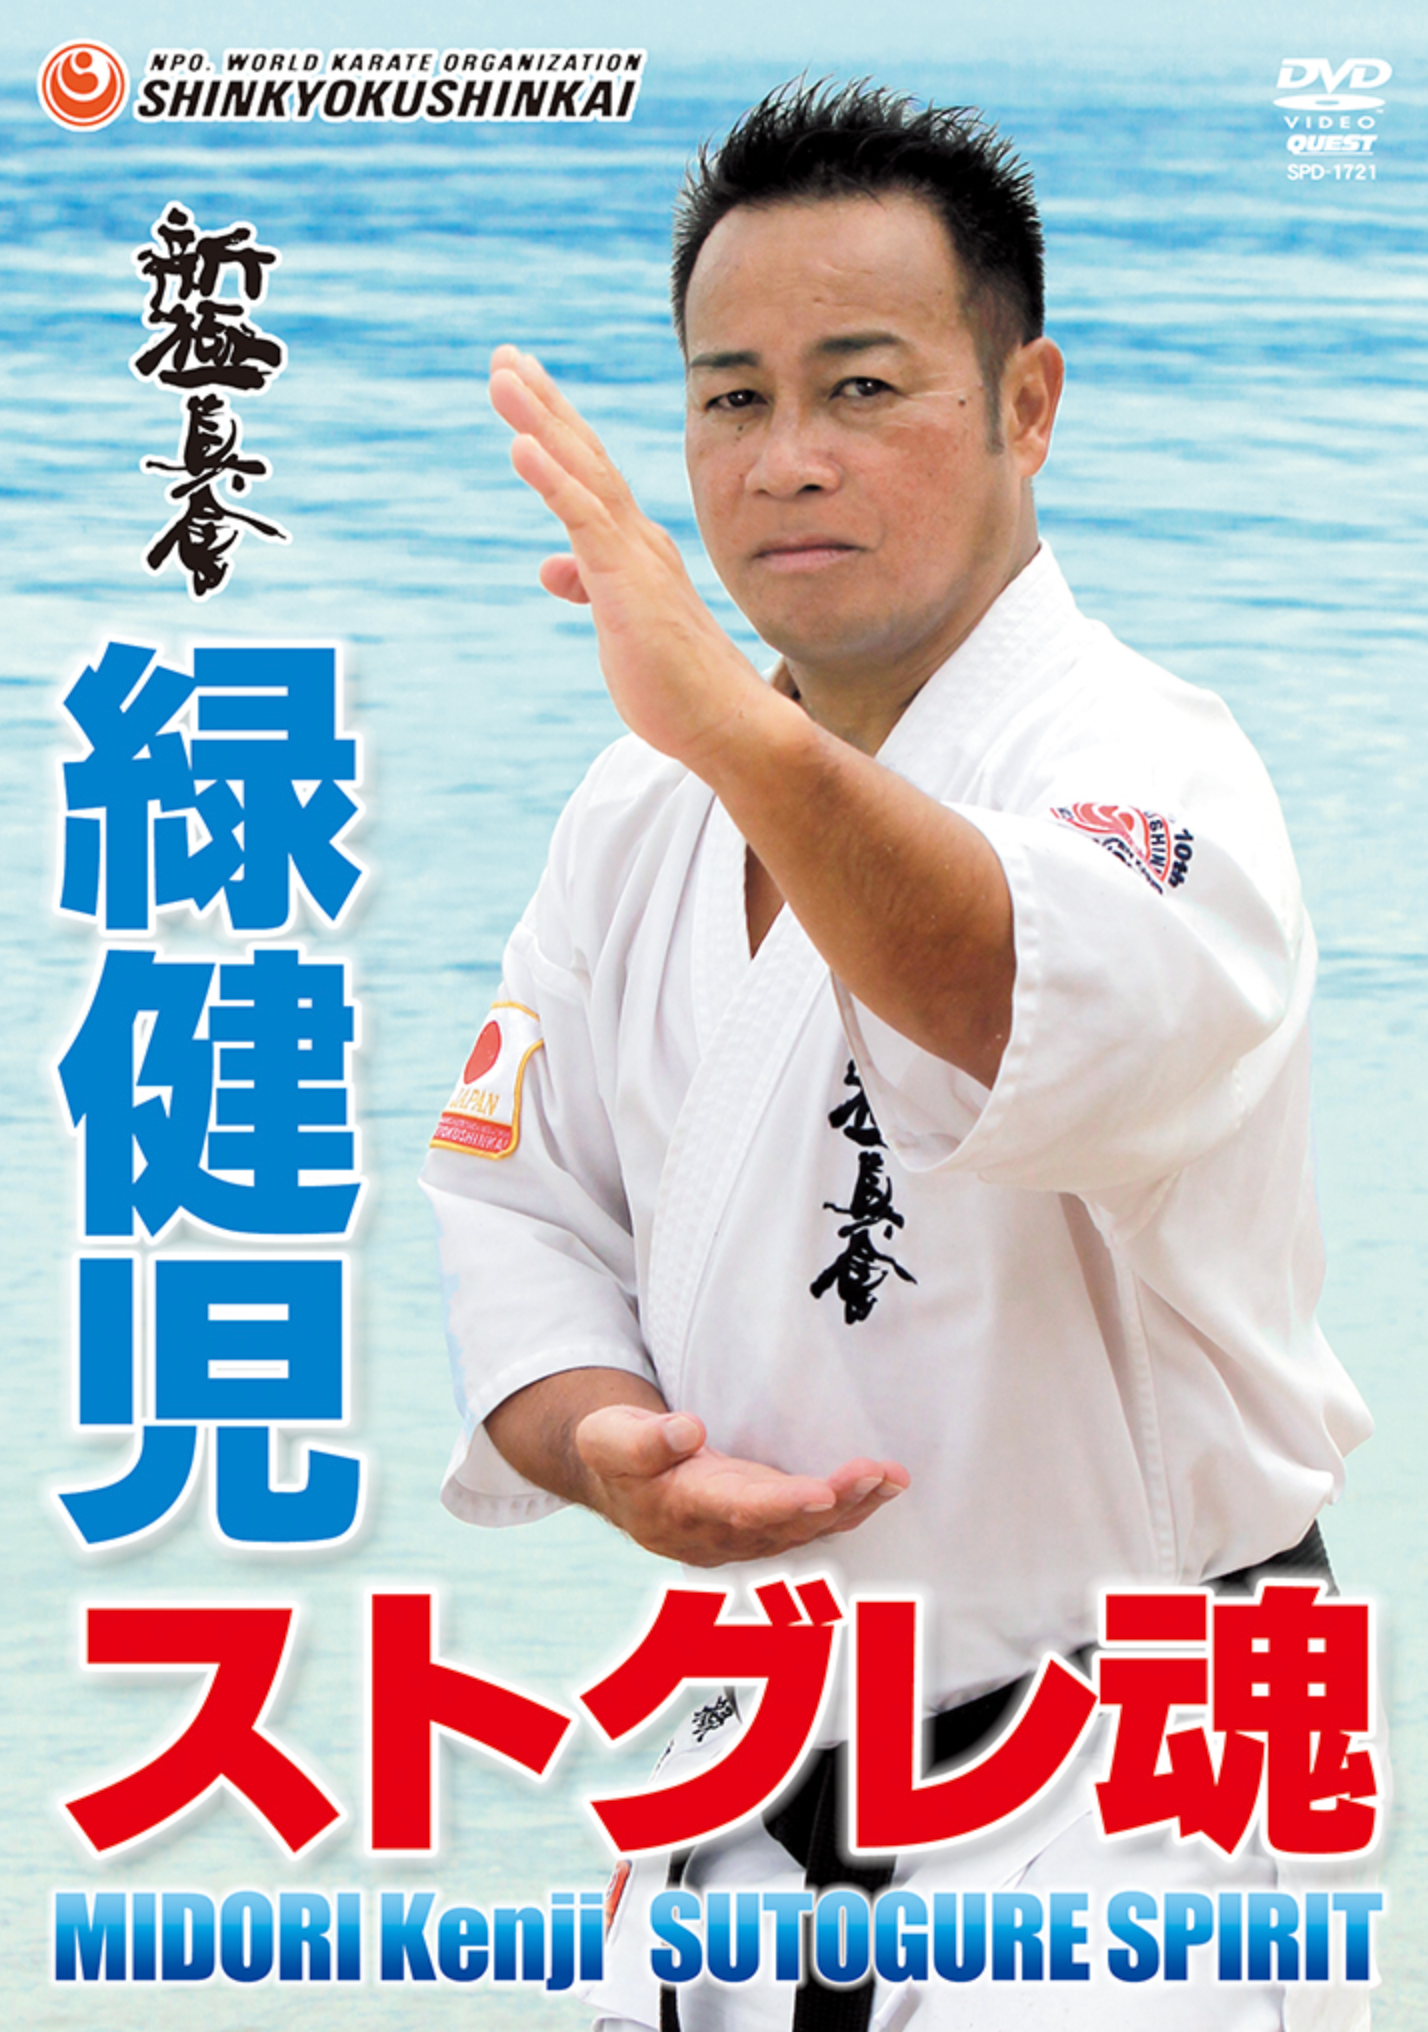 Kyokushin Karate Sutogure Spirit DVD with Kenji Midori - Budovideos Inc